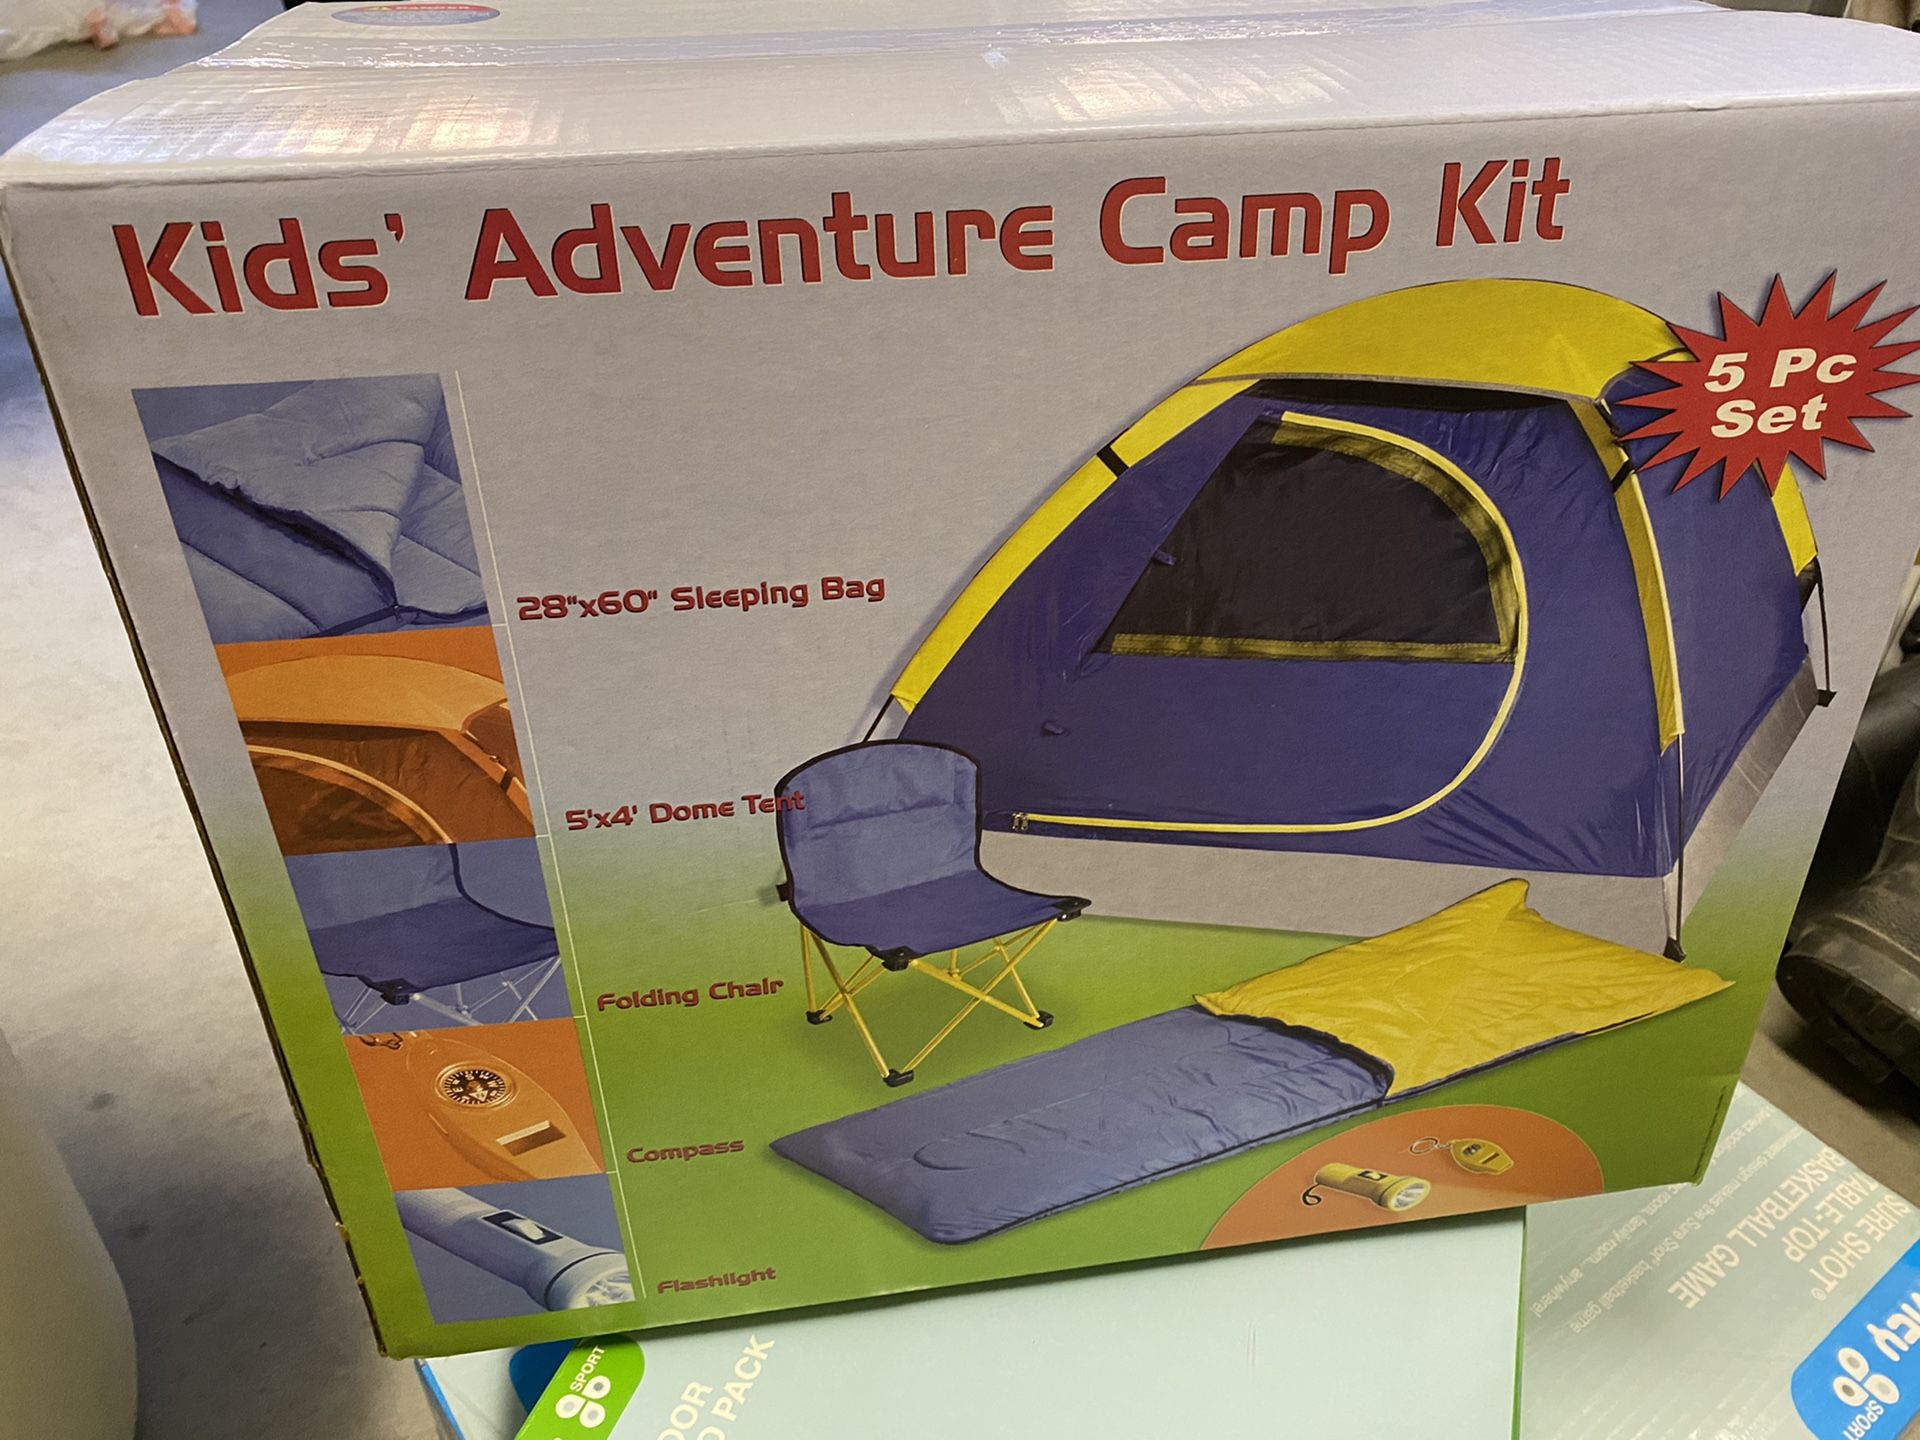 Brand new kids adventure camp kit